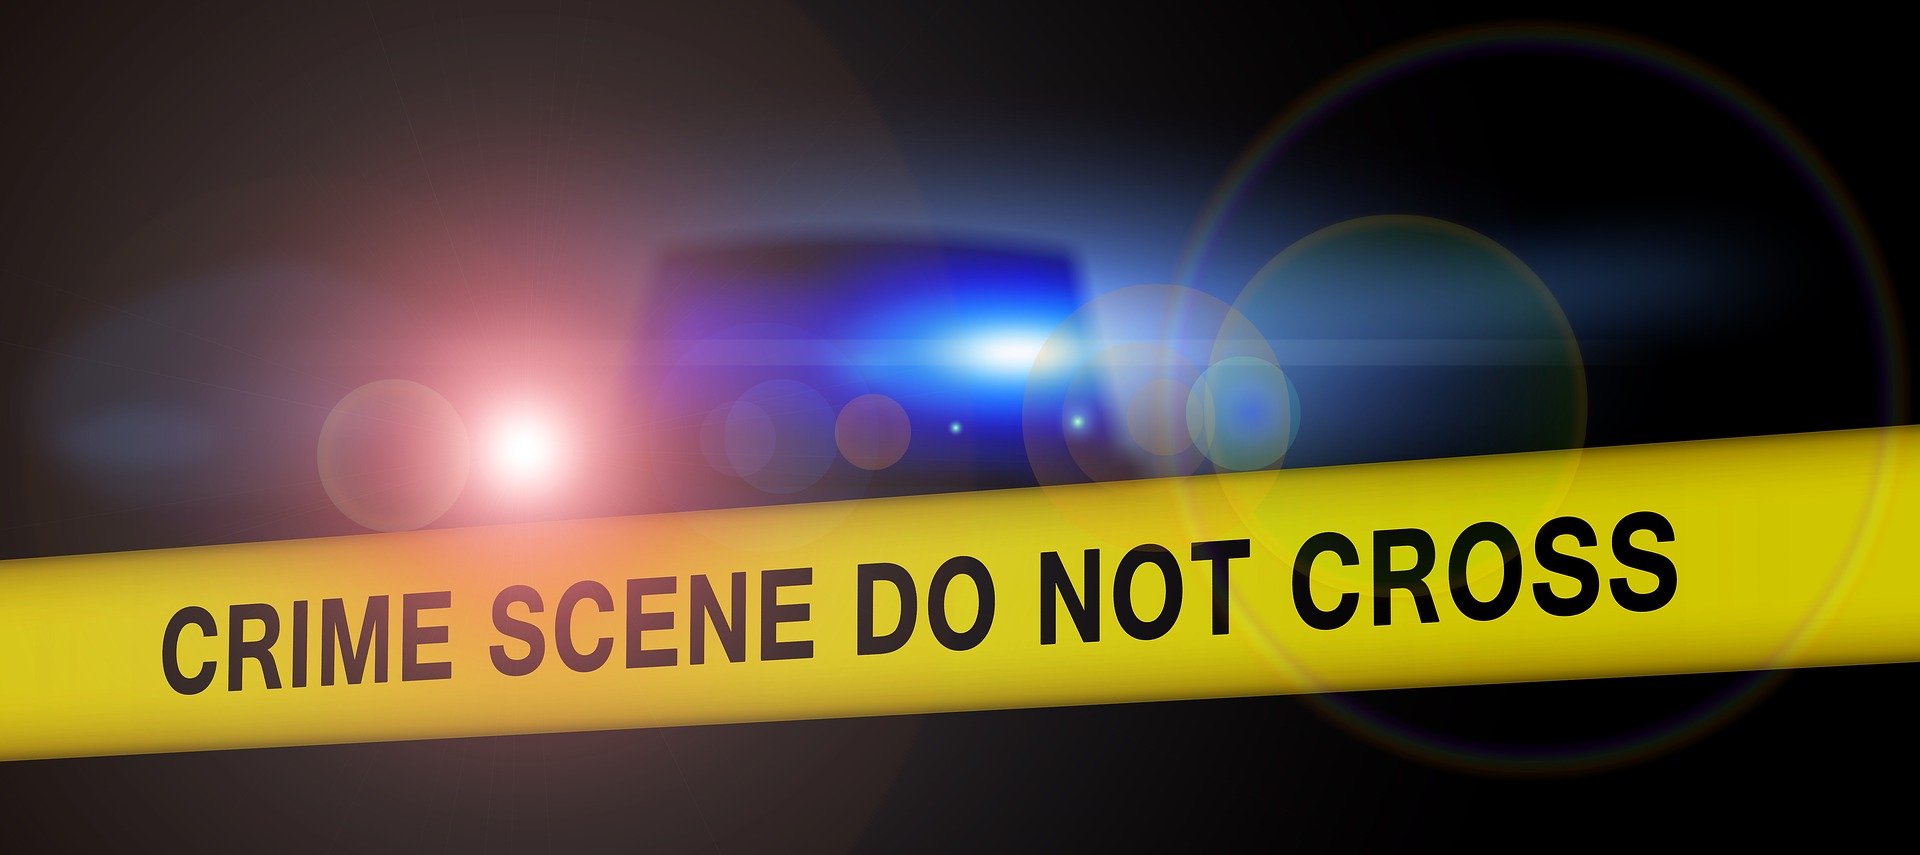 An image depicting a police crime scene | Photo: Pixabay